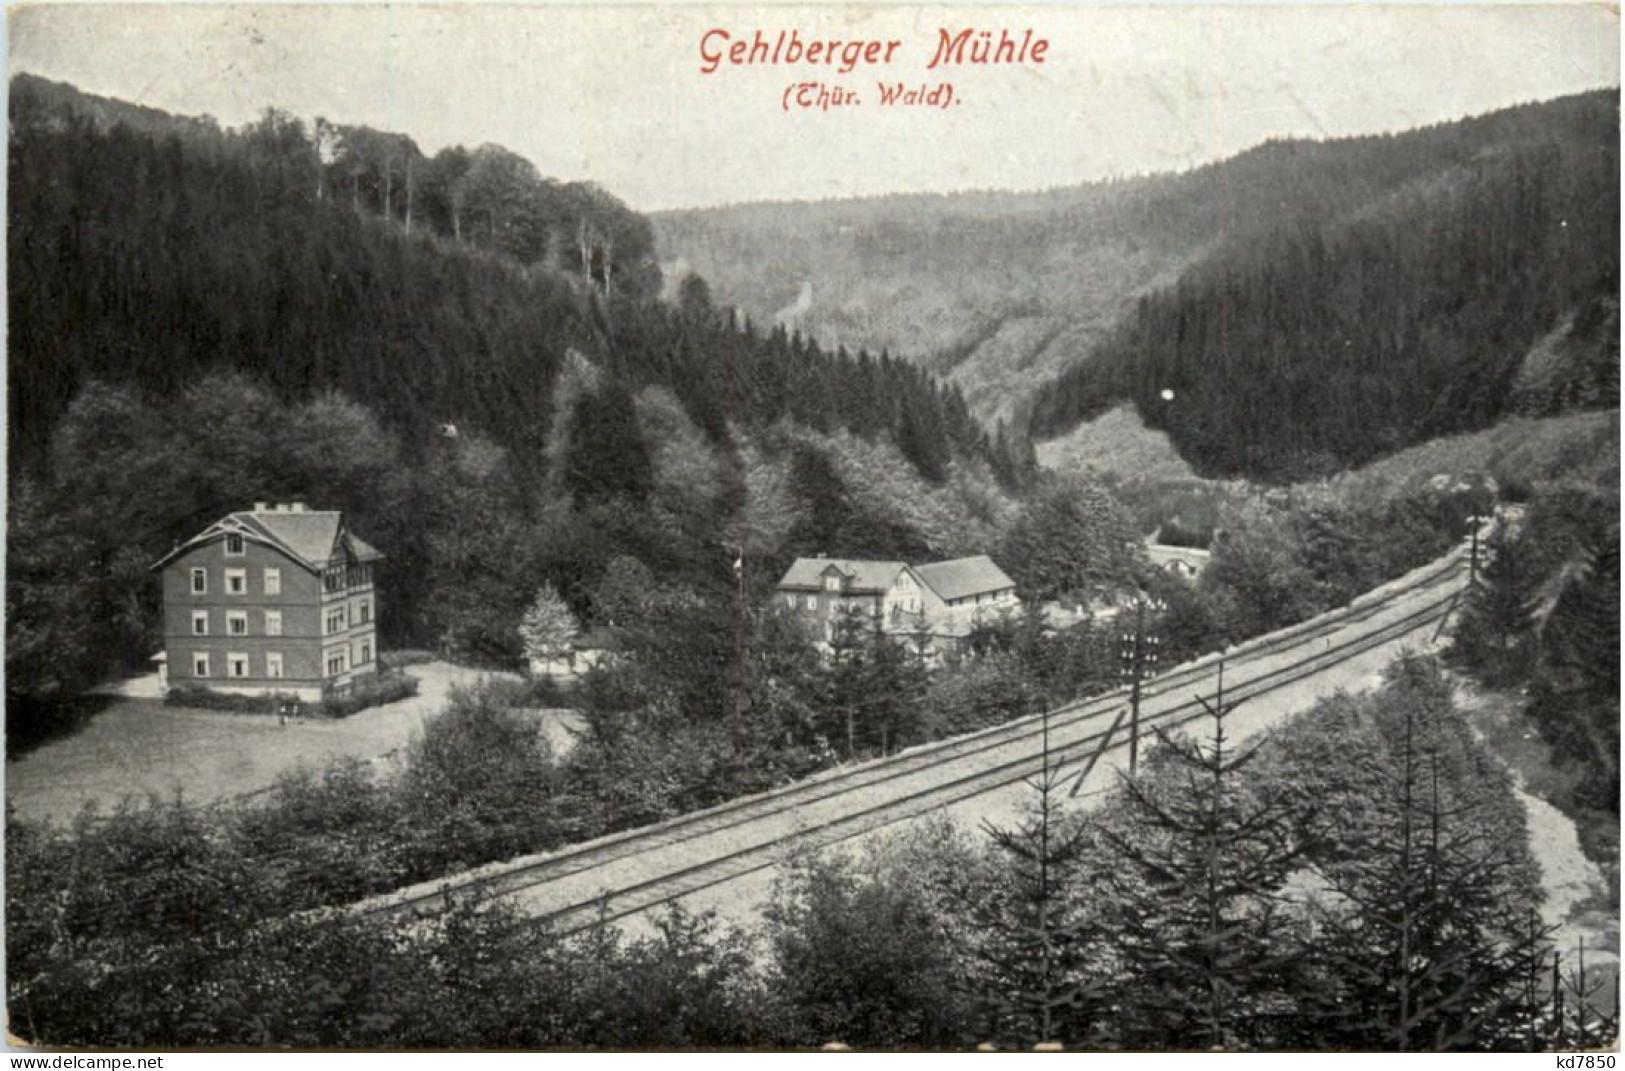 Gehlberger Mühle, Thür. Wald - Ilmenau